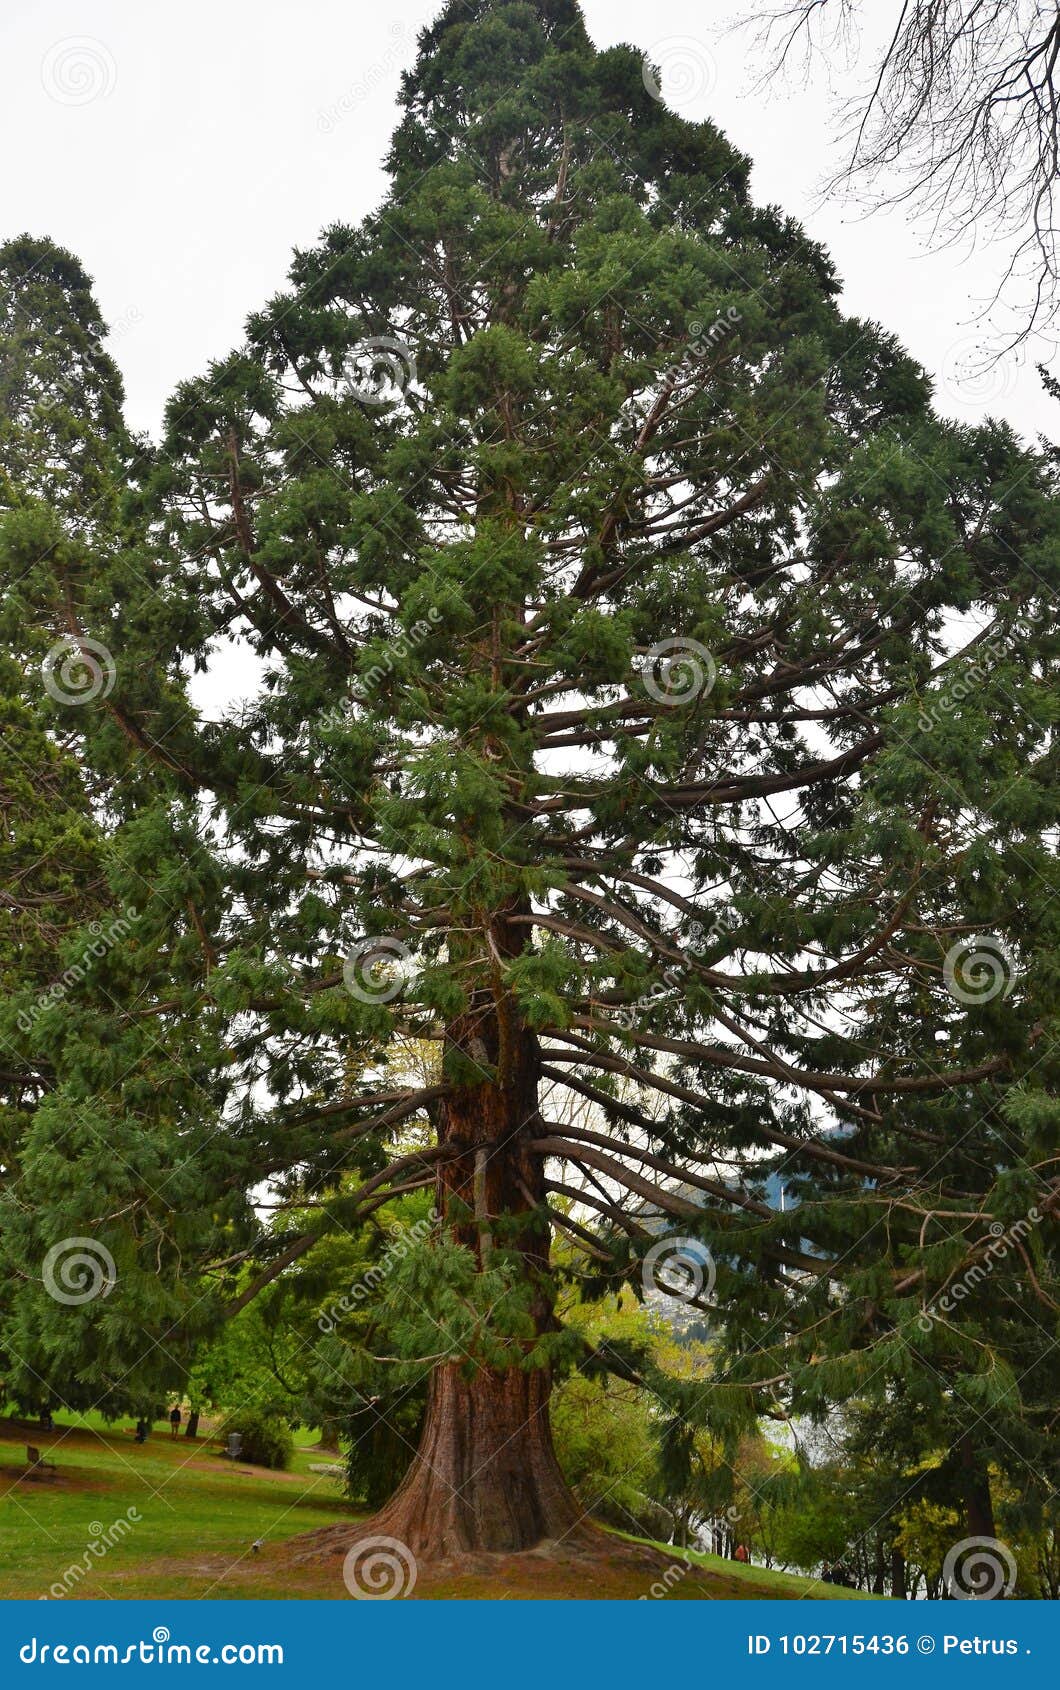 giant sequoia wellingtonia sequoiadendron giganteum